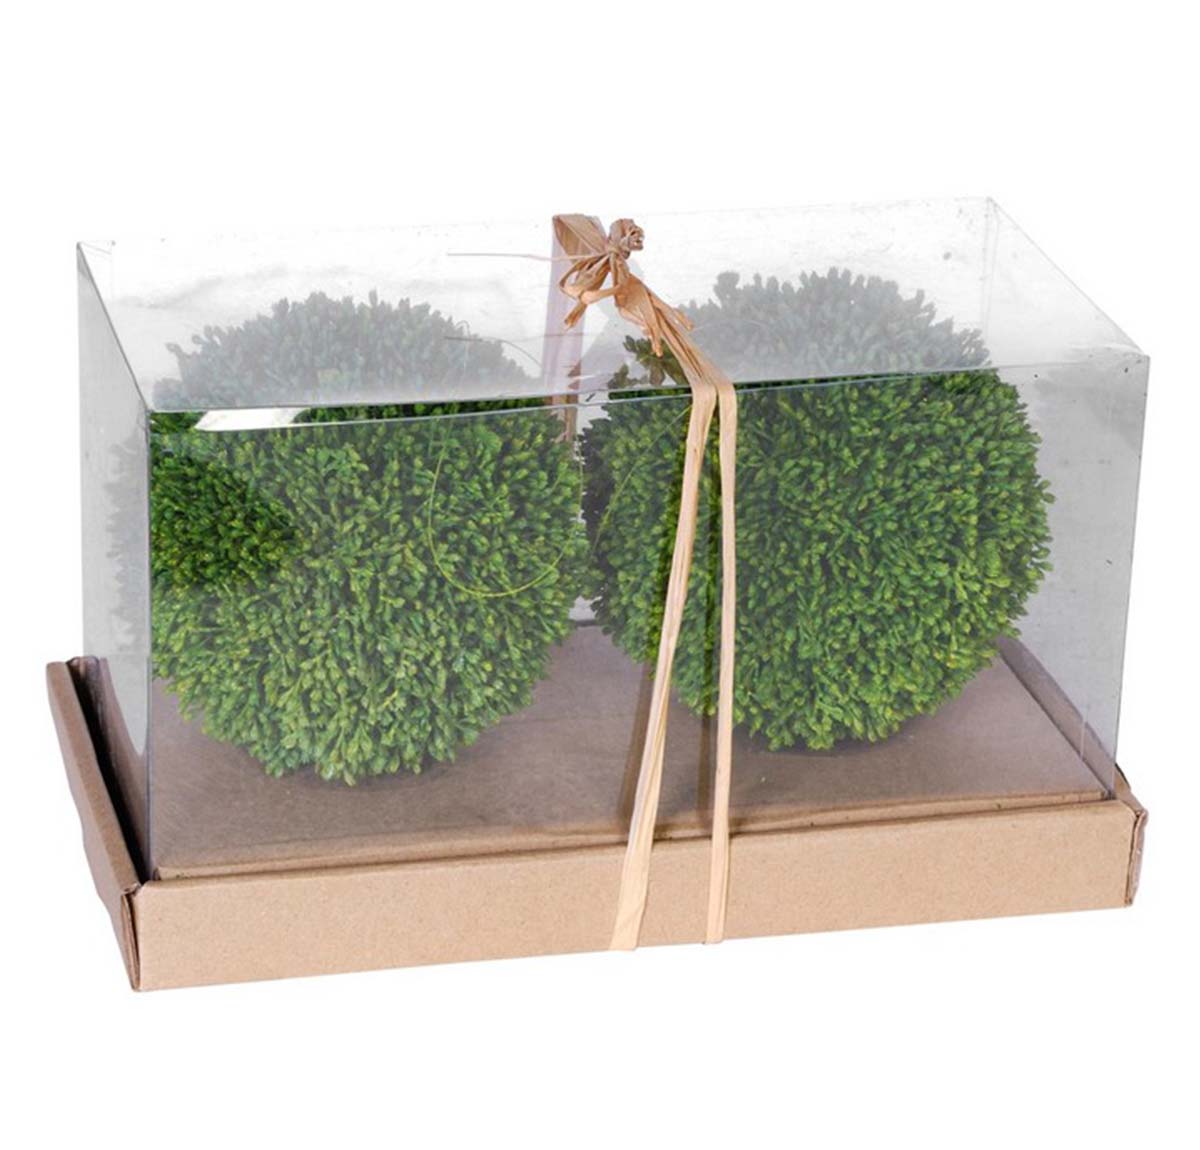 Artificial Topiary/Grass Balls In A Box - 2 pcs | Home Decor